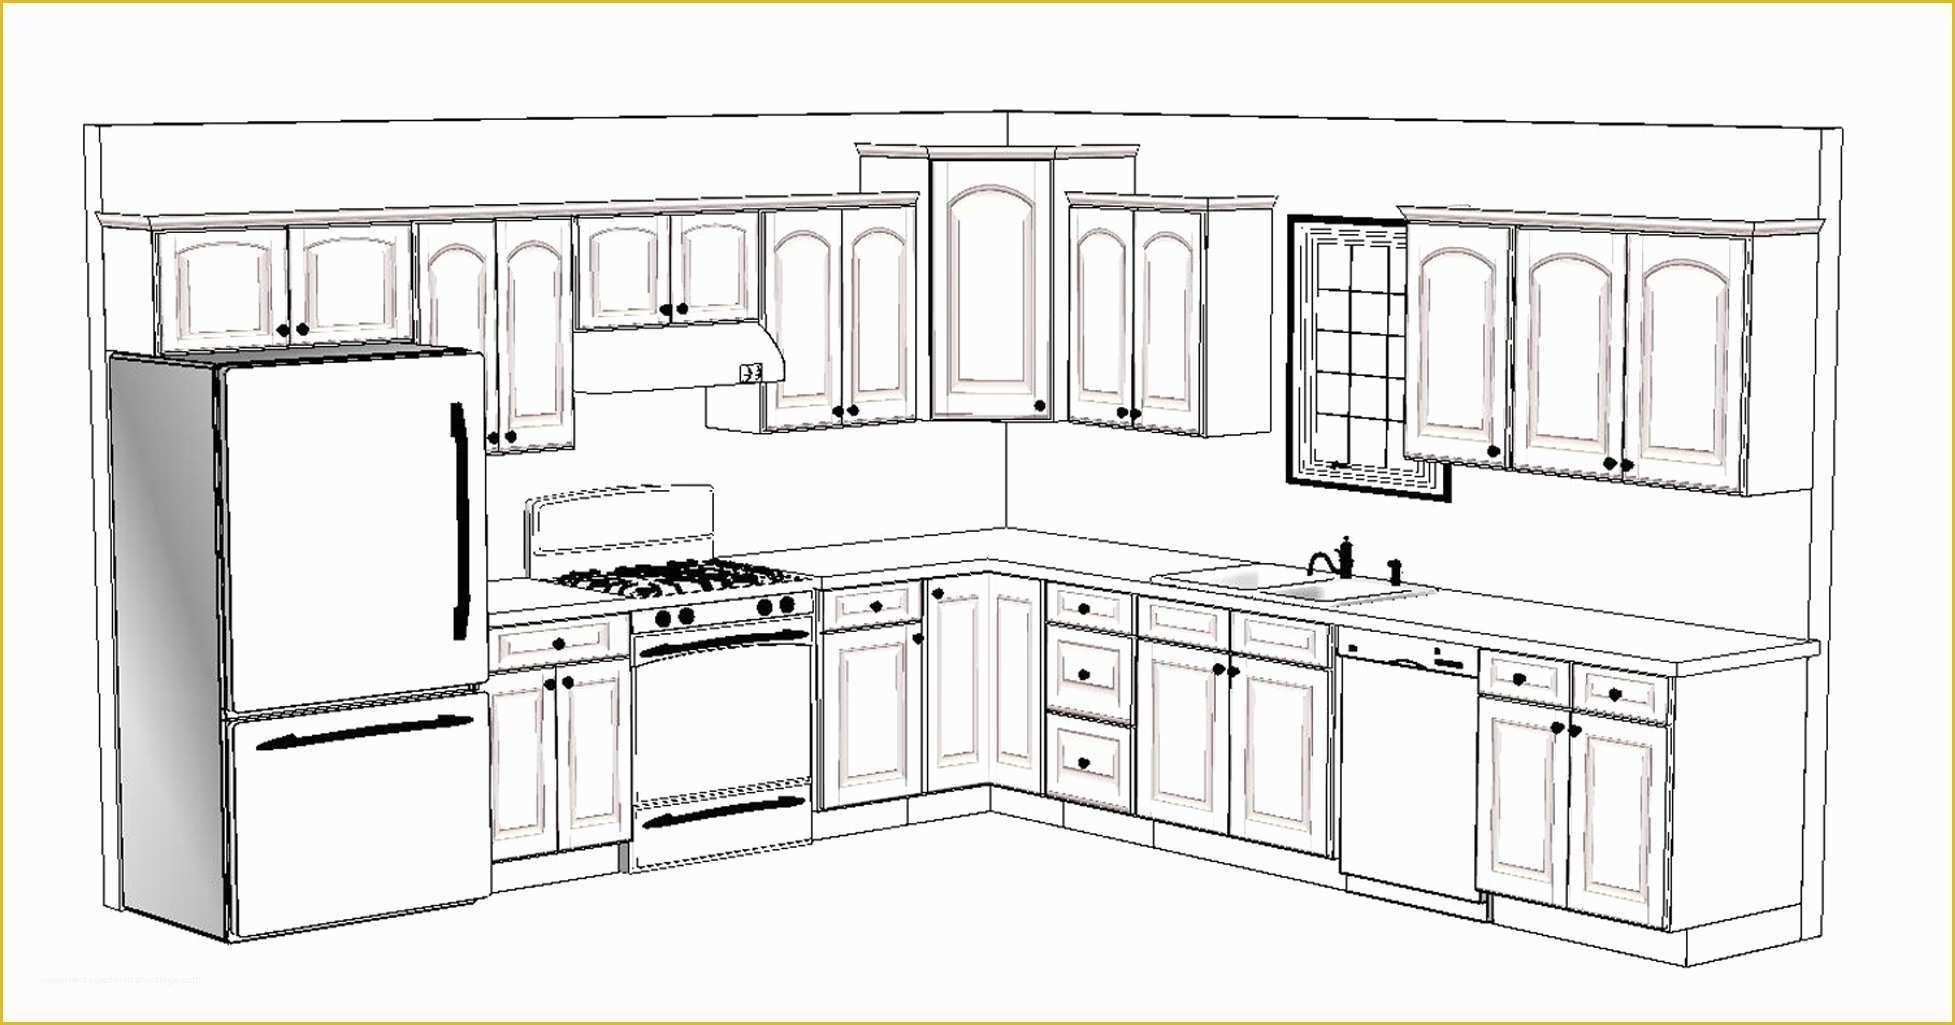 Kitchen Remodeling Templates Free Of Kitchen Layout Templates 6 Different Designs Hgtv Kitchen